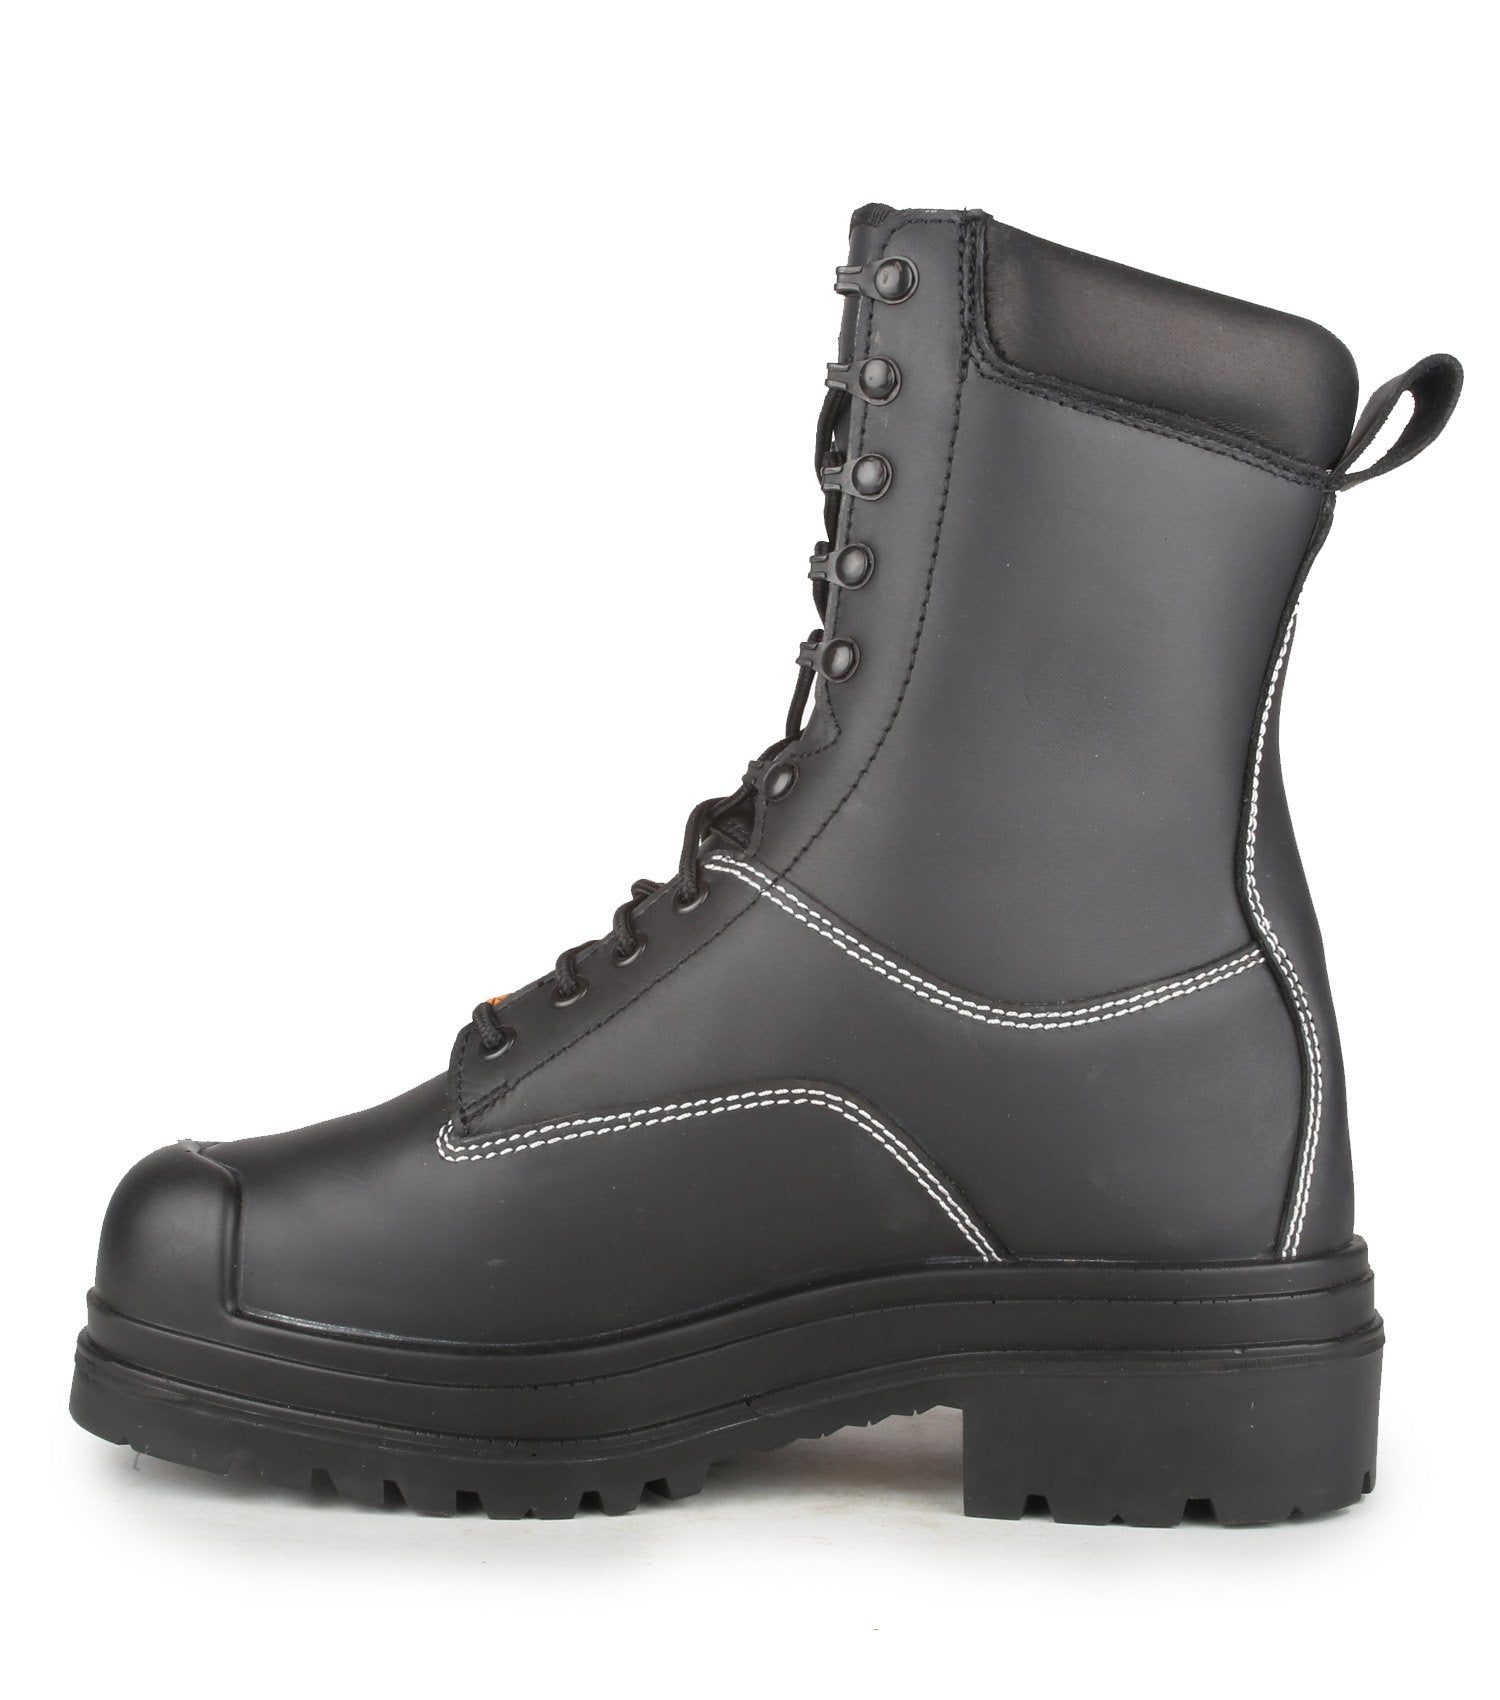 STC Hardrock 10" Internal Metguard Safety Boots | Black | Sizes 6 - 14 Work Boots - Cleanflow